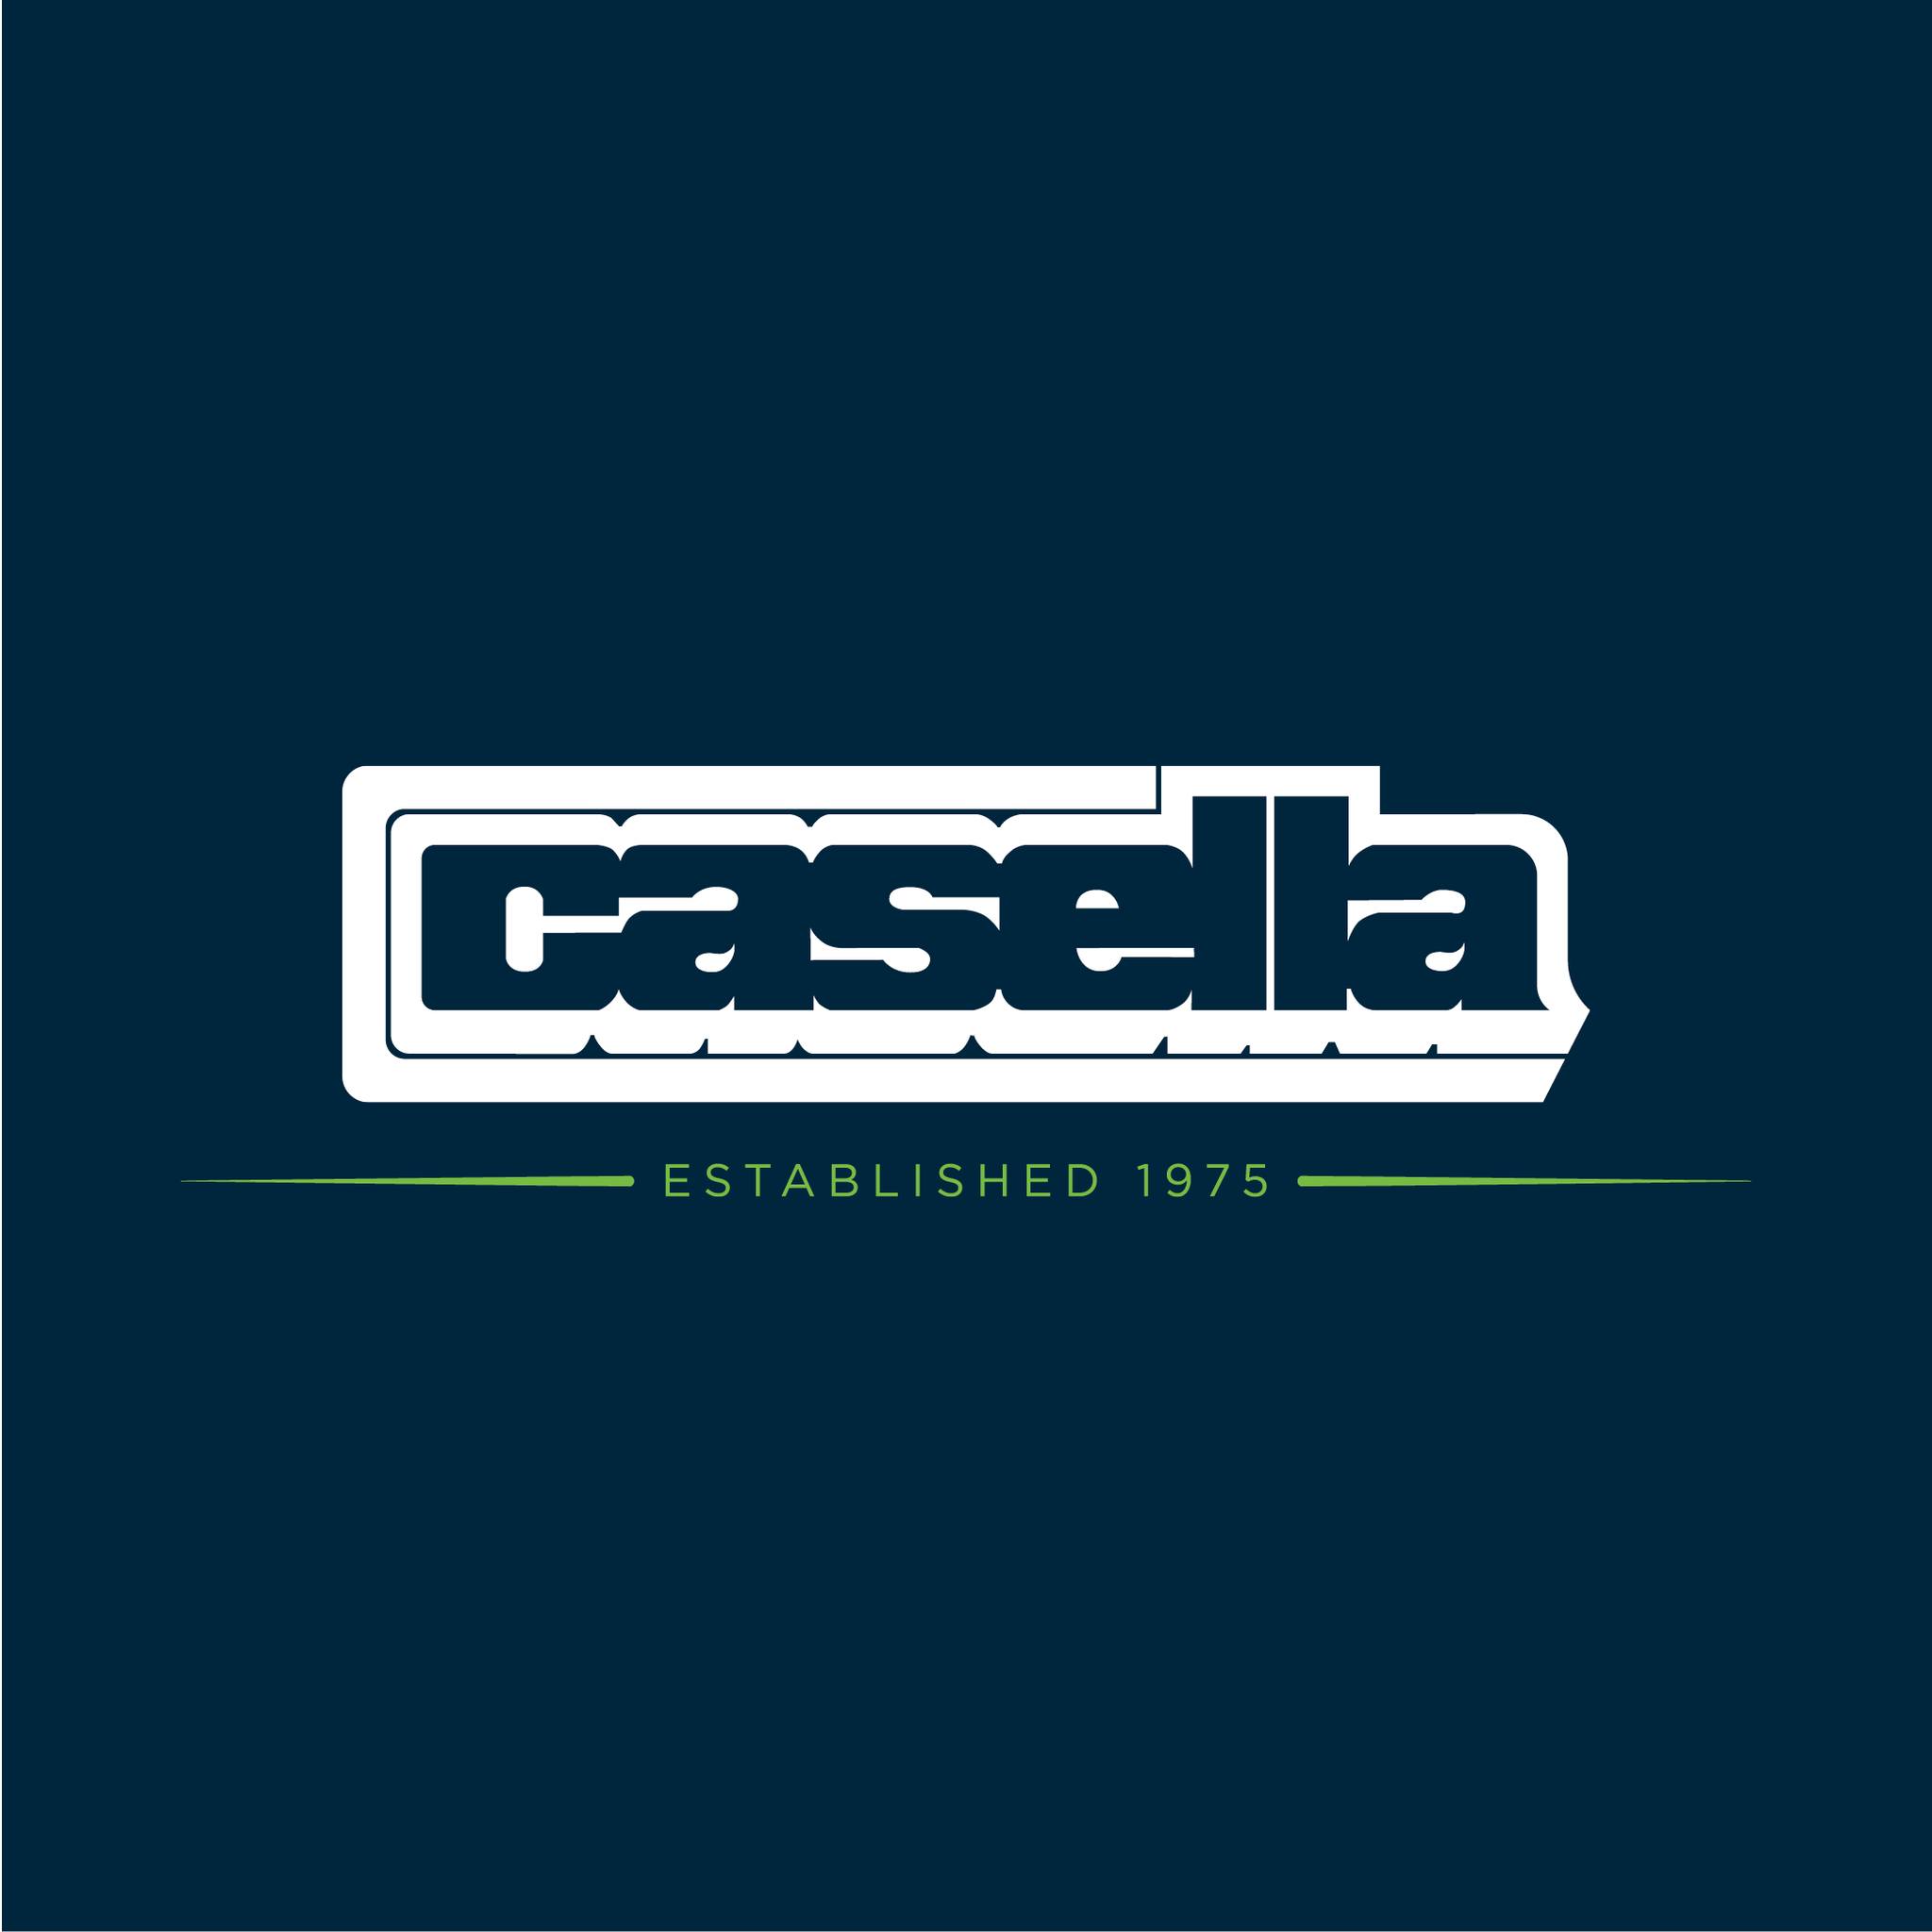 Casella Waste logo